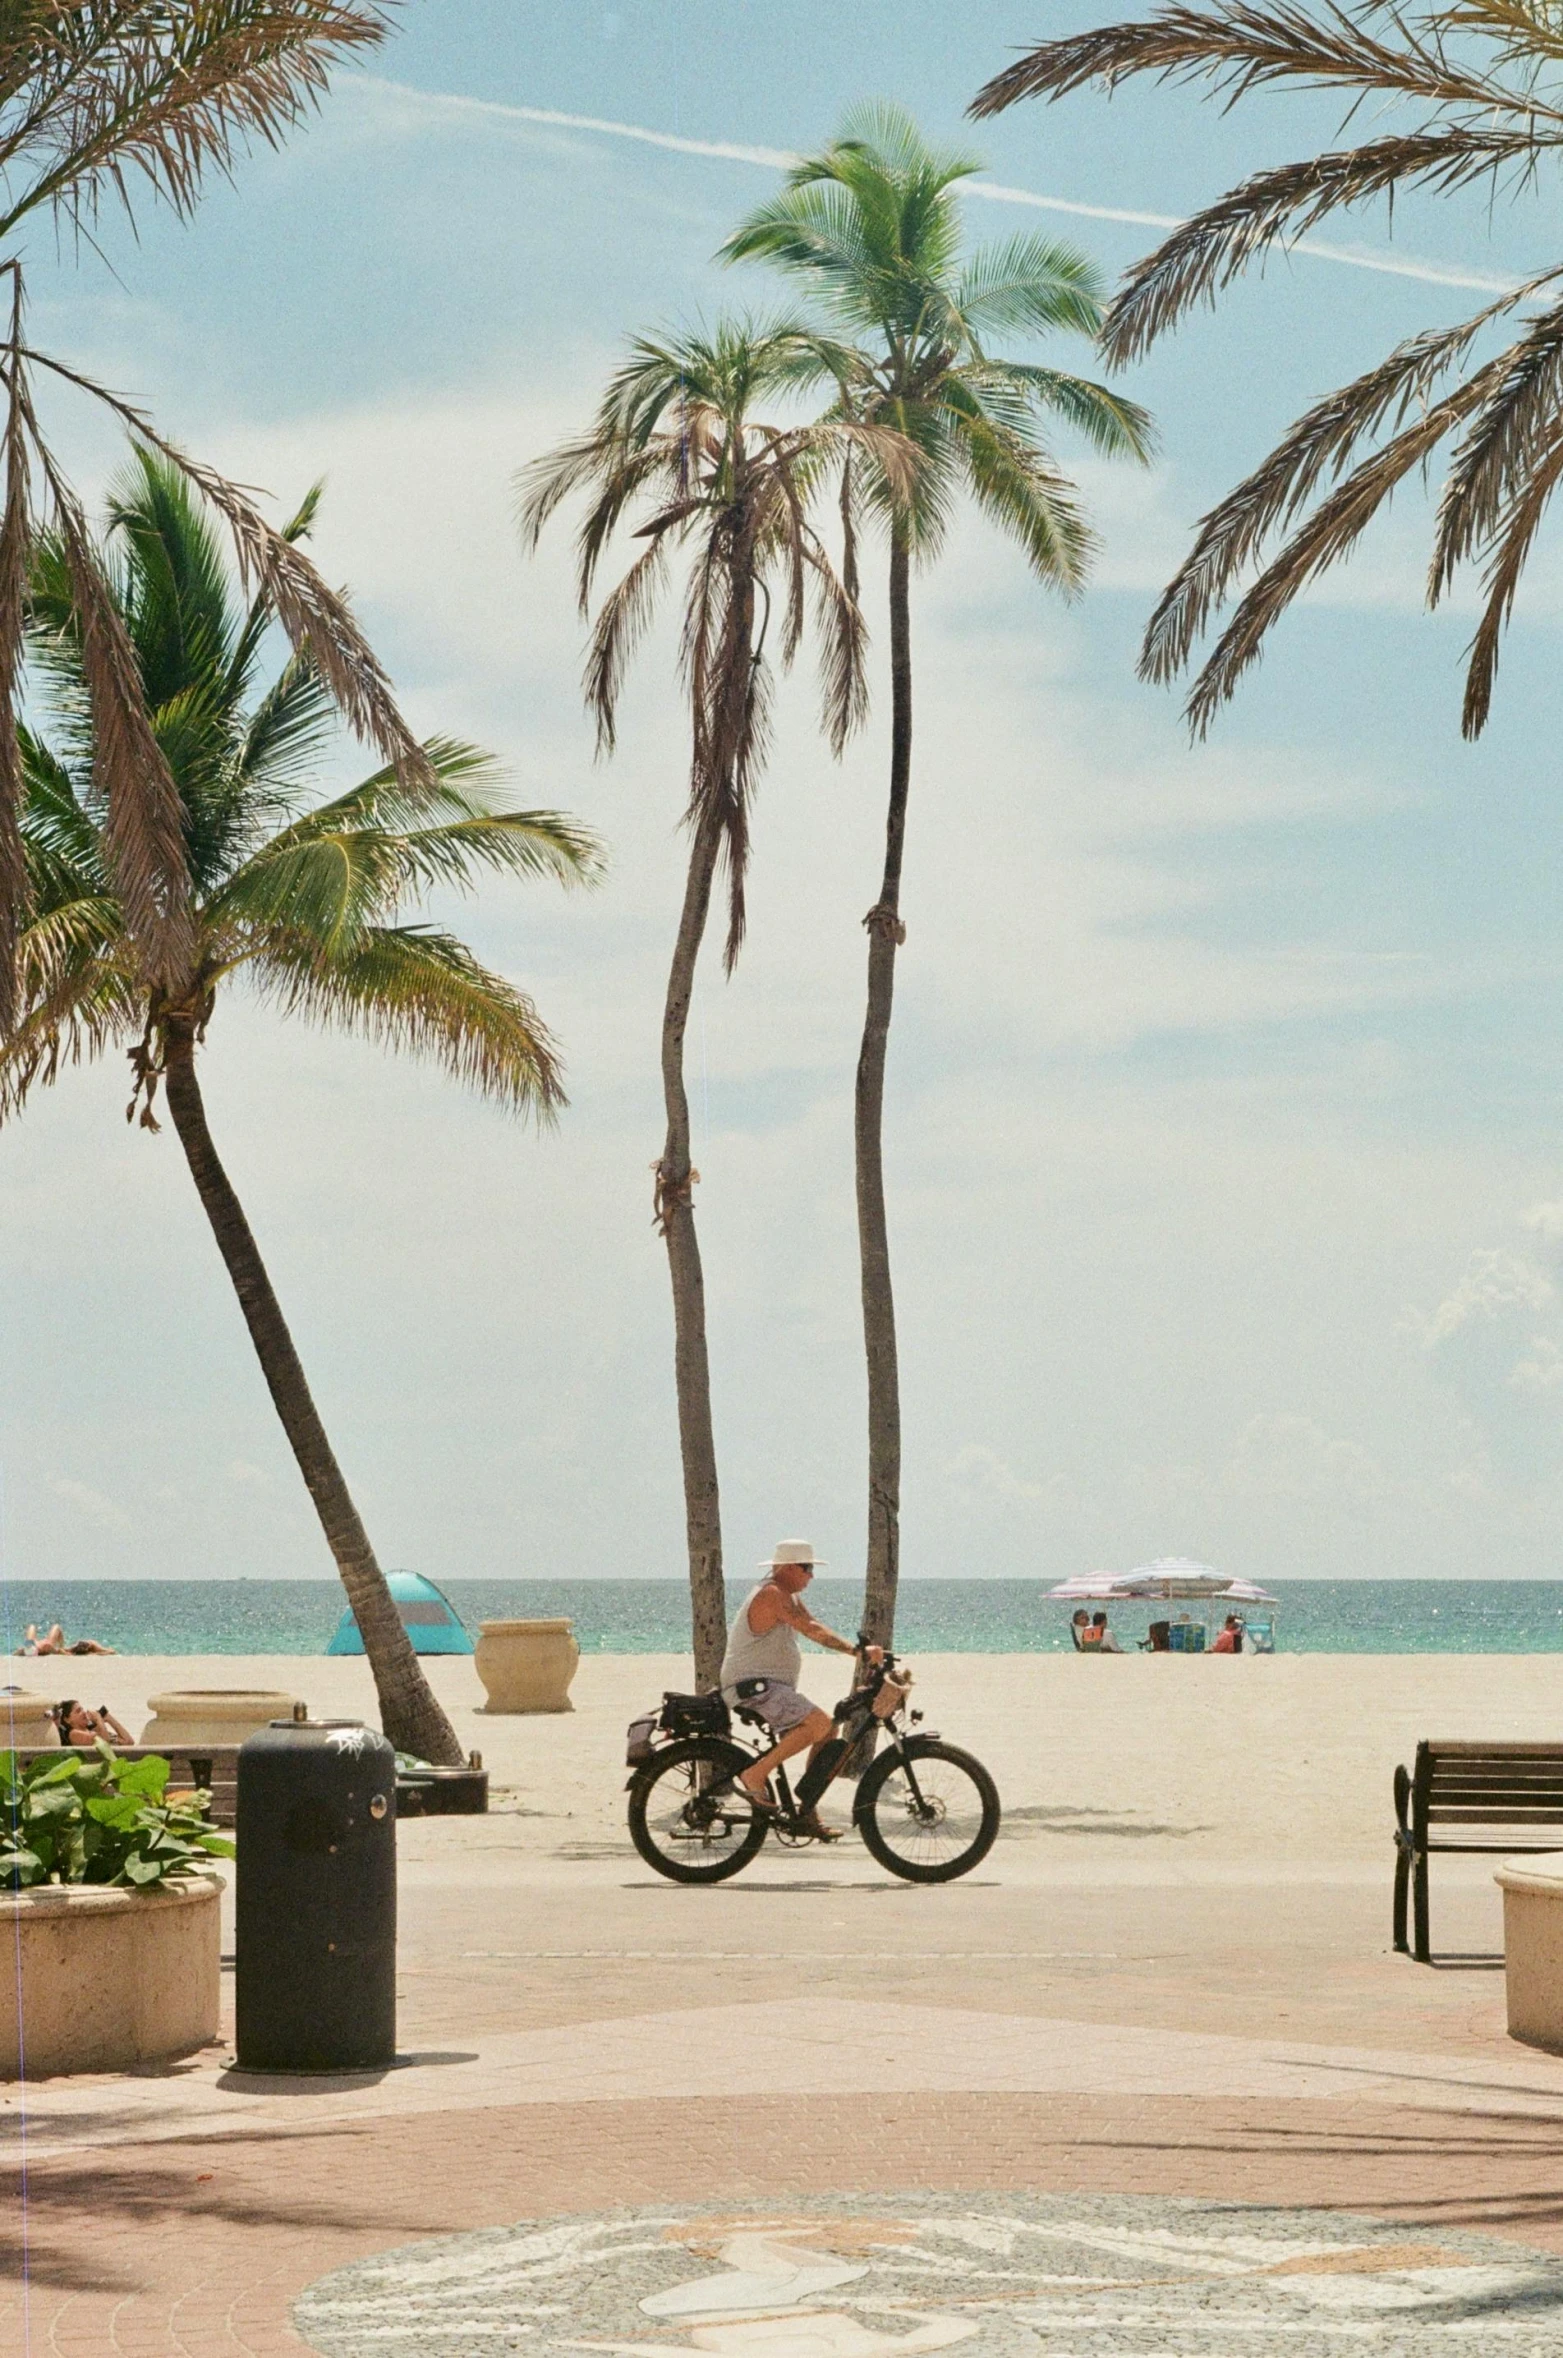 a person riding a bike along the beach